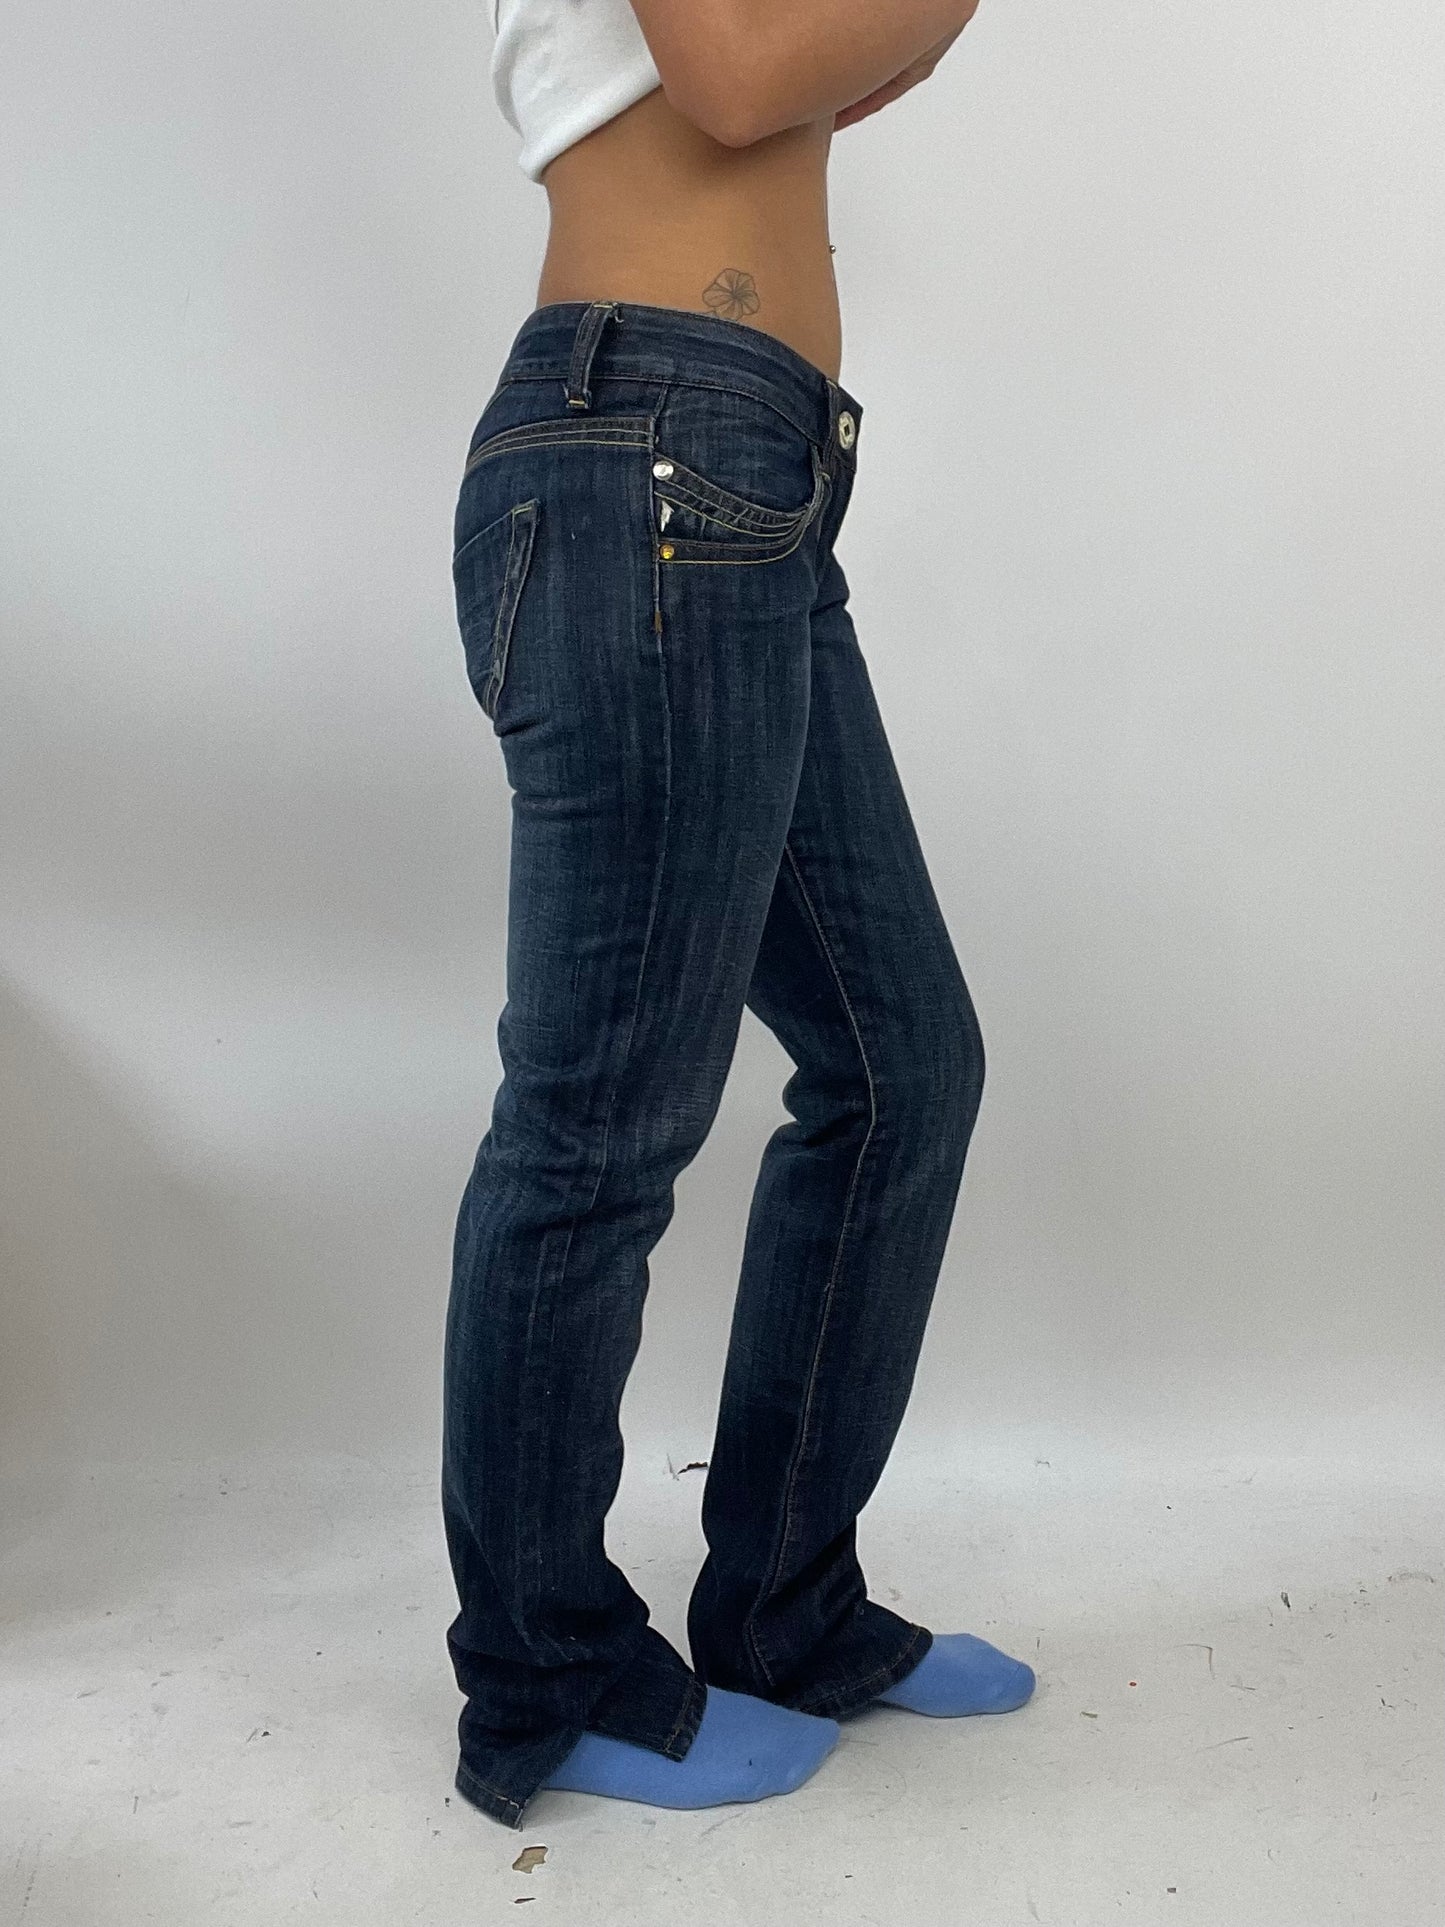 ADDISON RAE DROP | small dark denim straight leg jeans